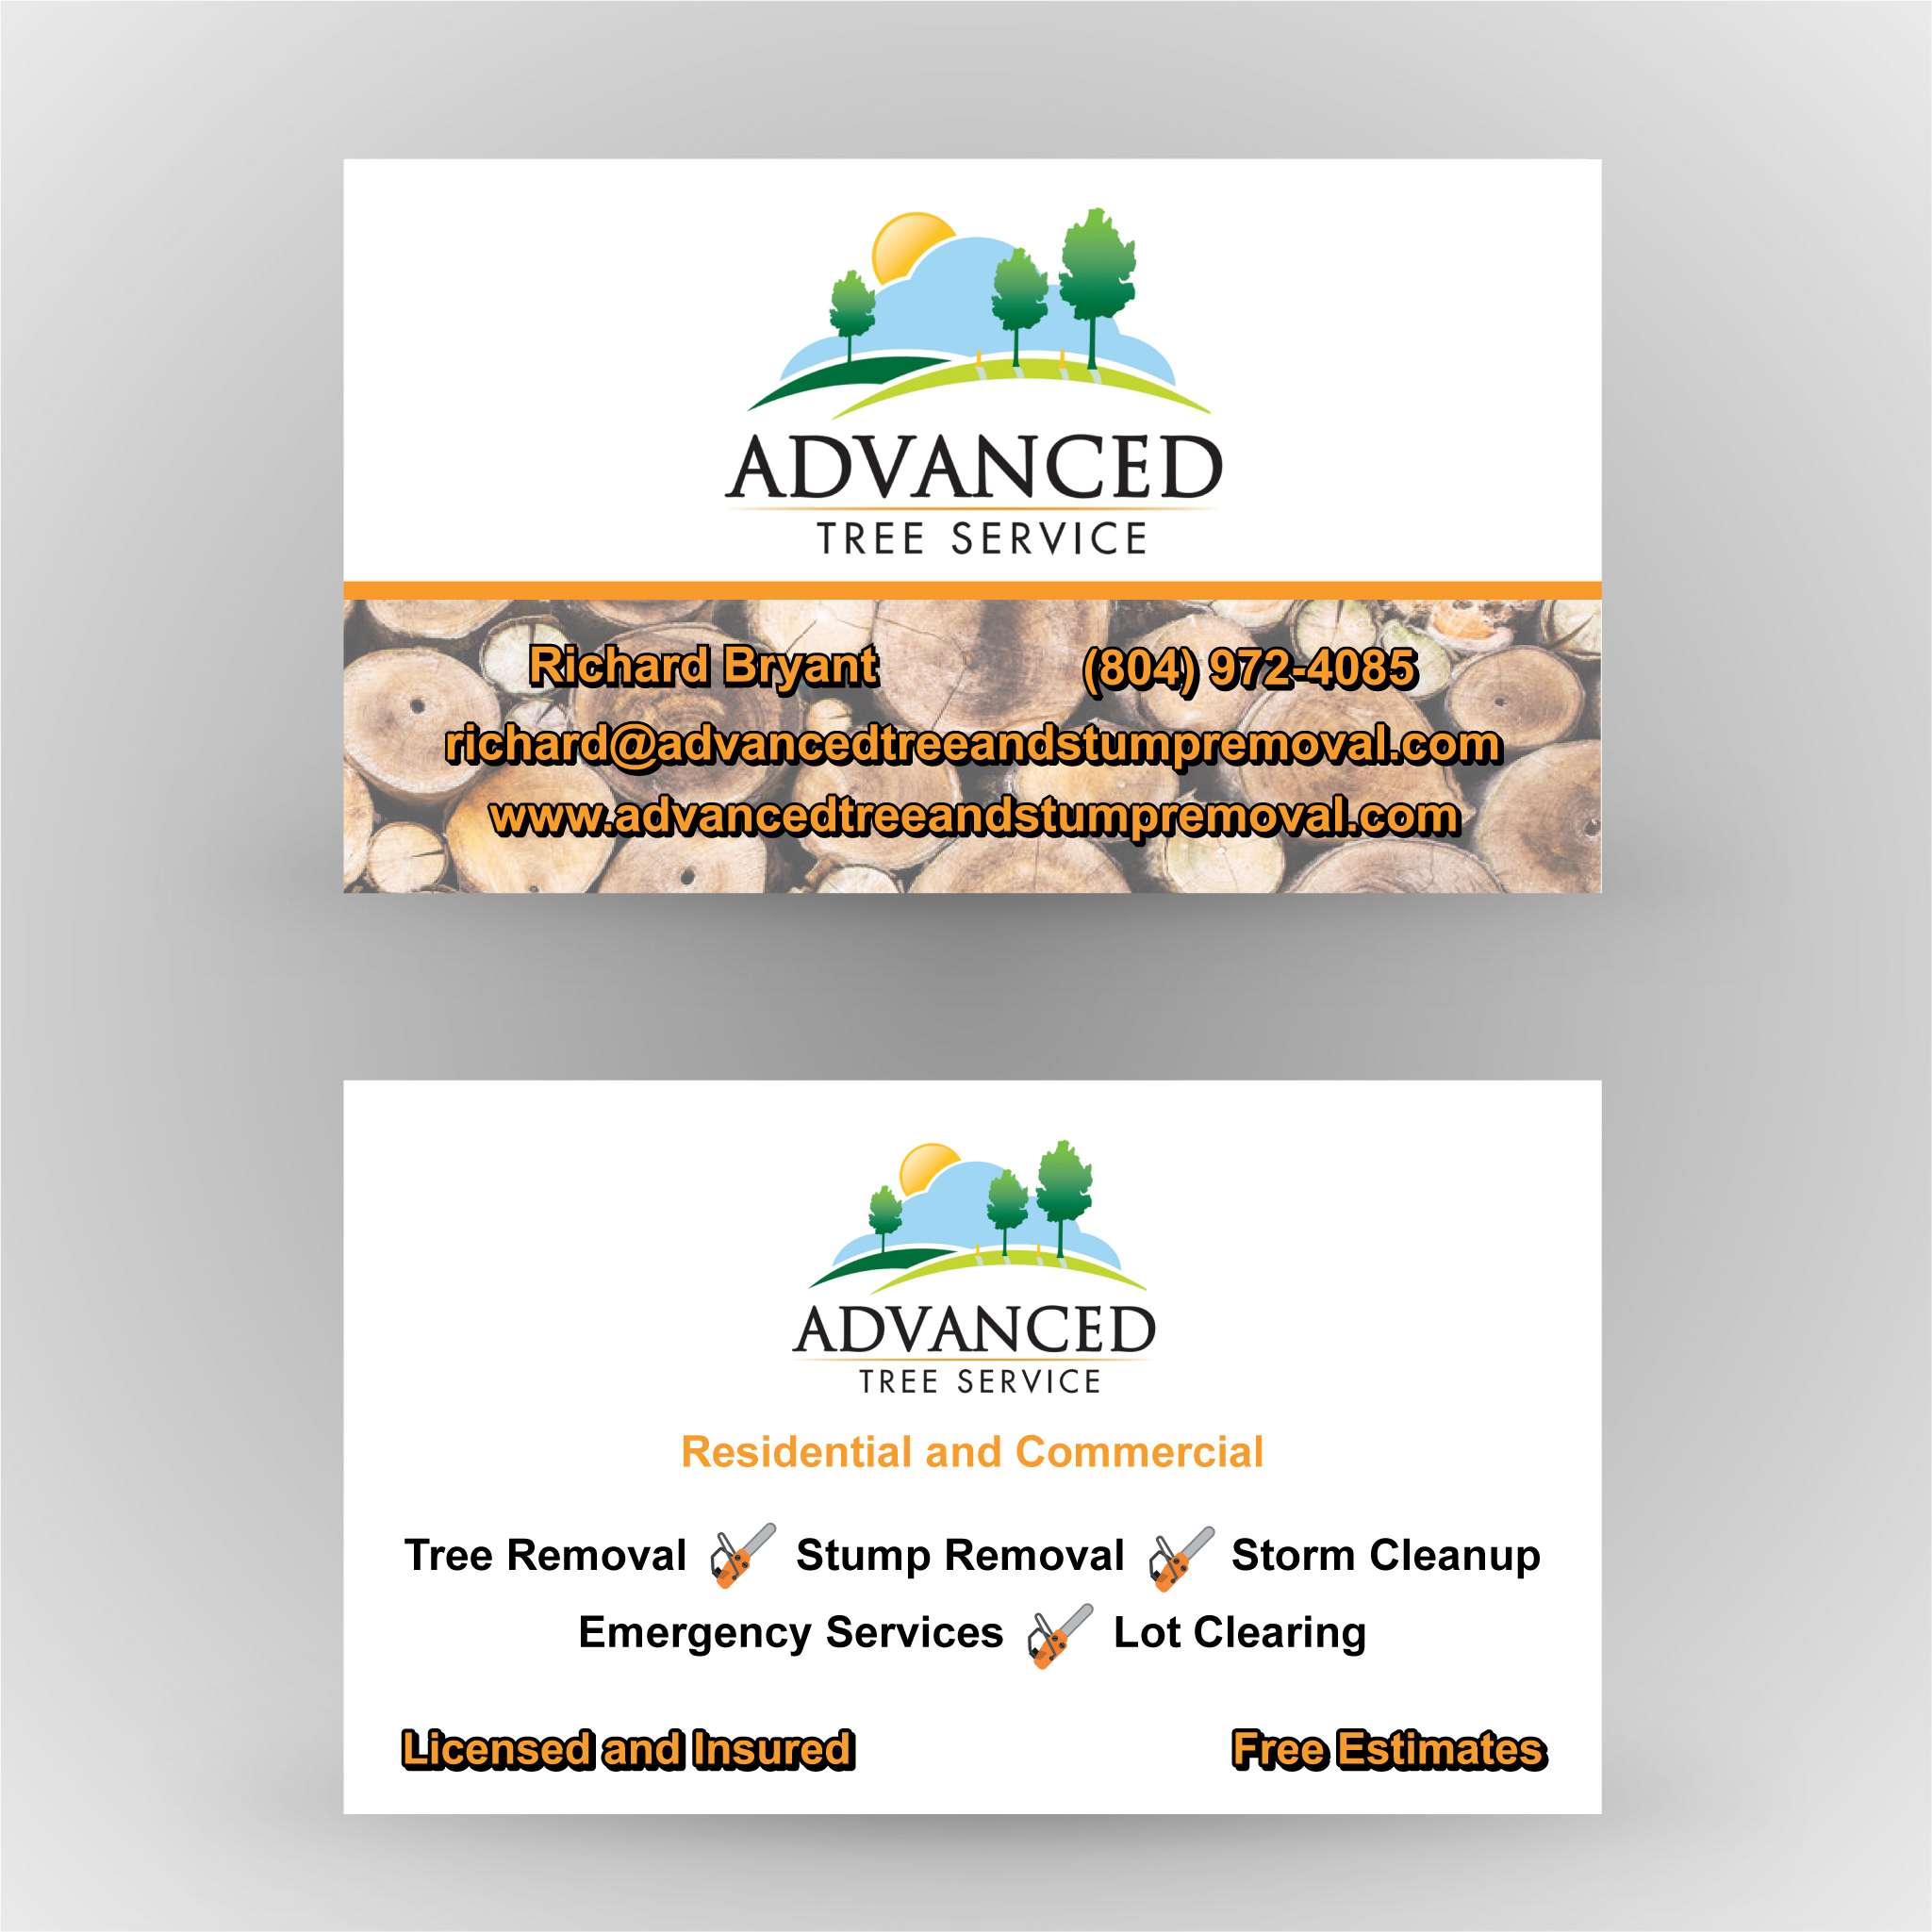 Advance Tree Service - Business Cards